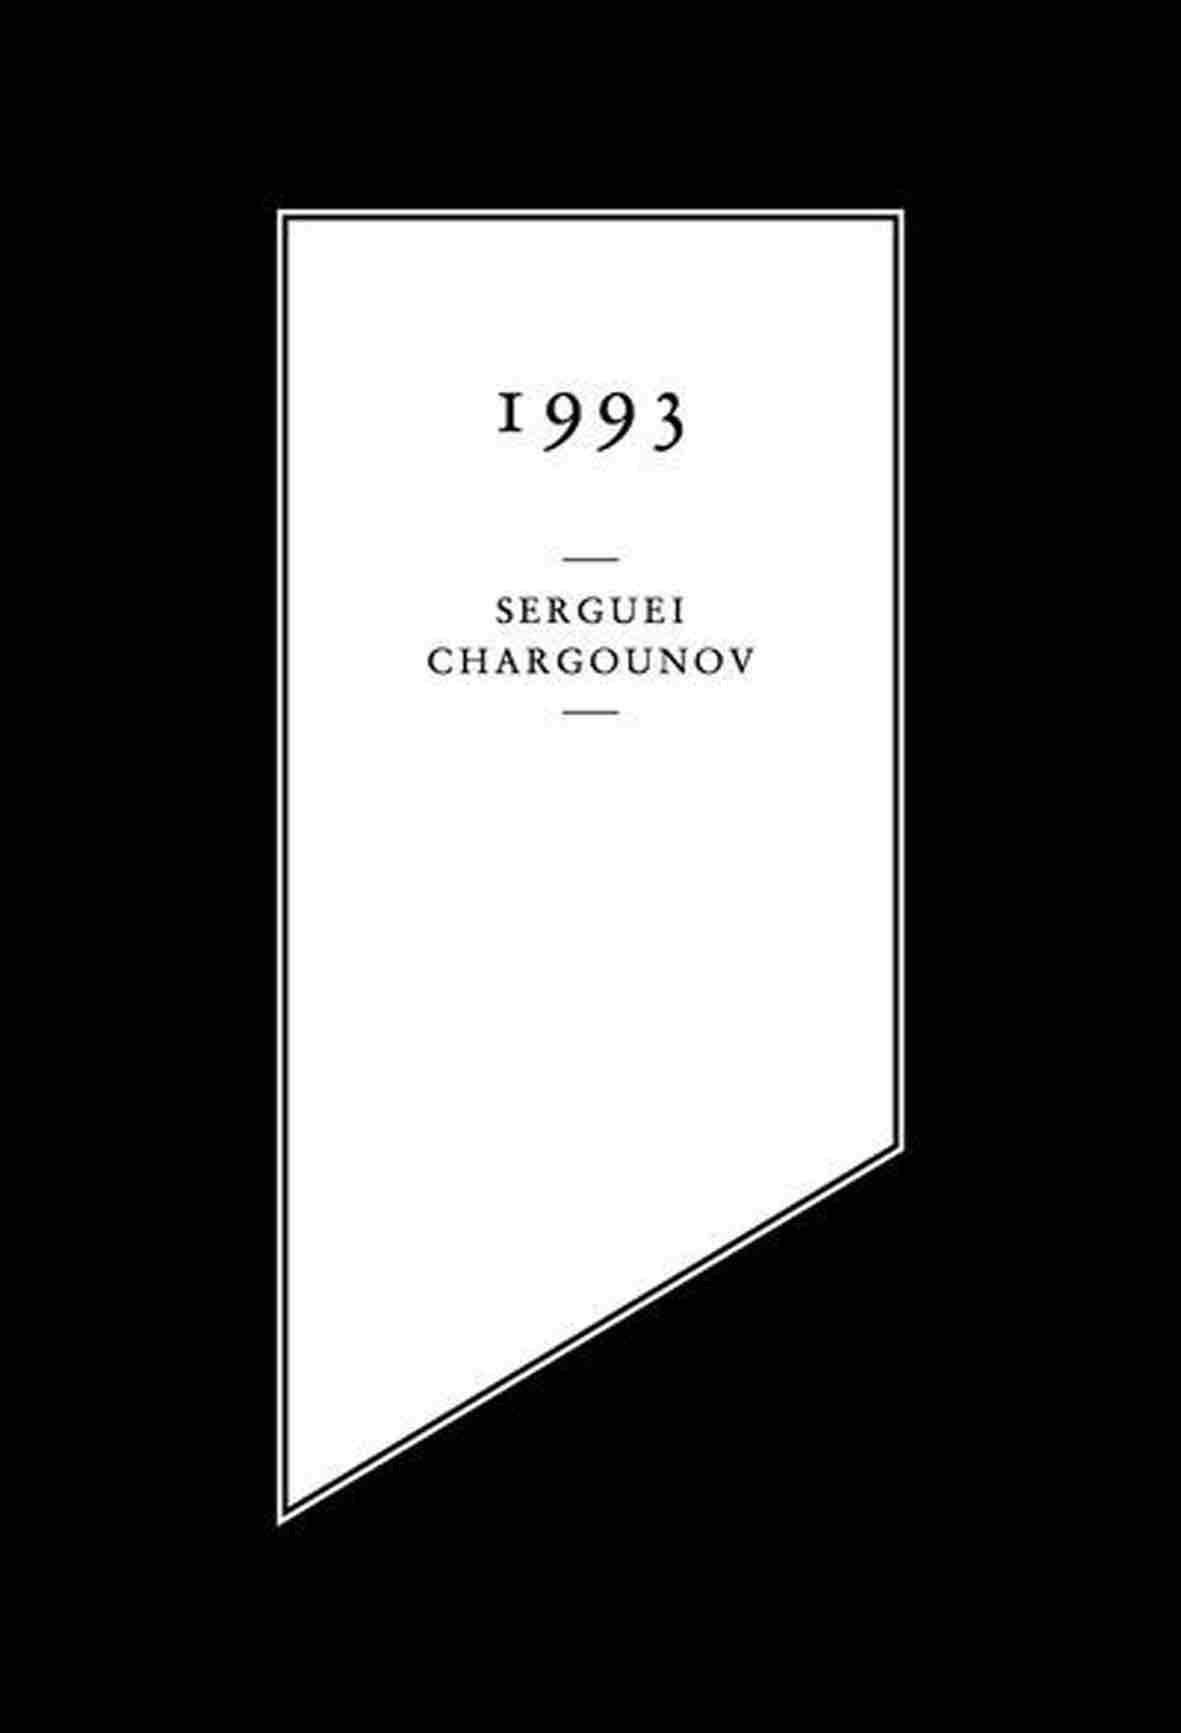 Chargounov